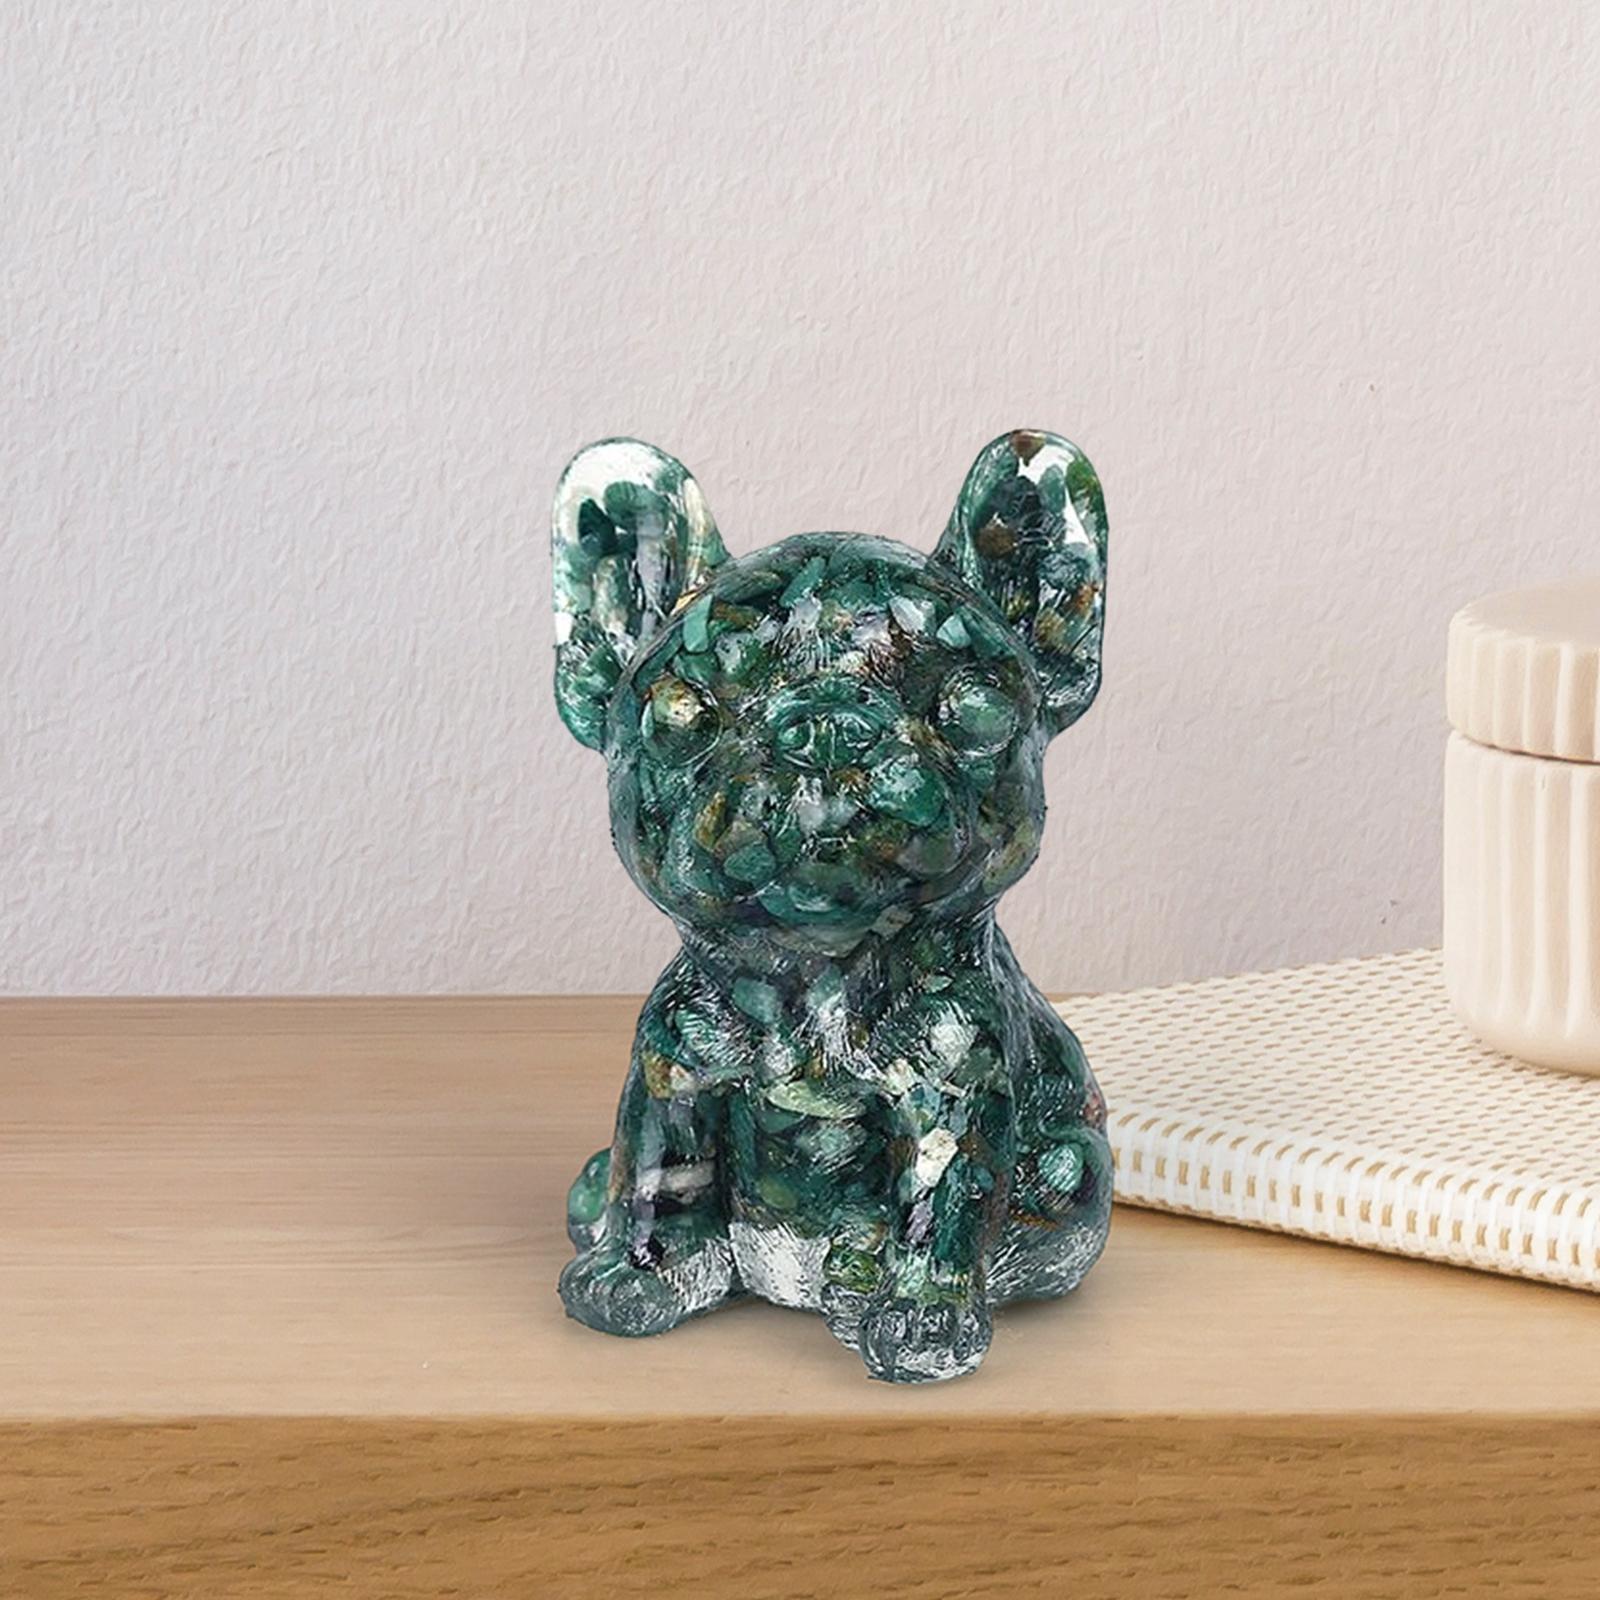 French Bulldog Figurine Ornament Small for Bedroom Desktop Collectible Dark Green